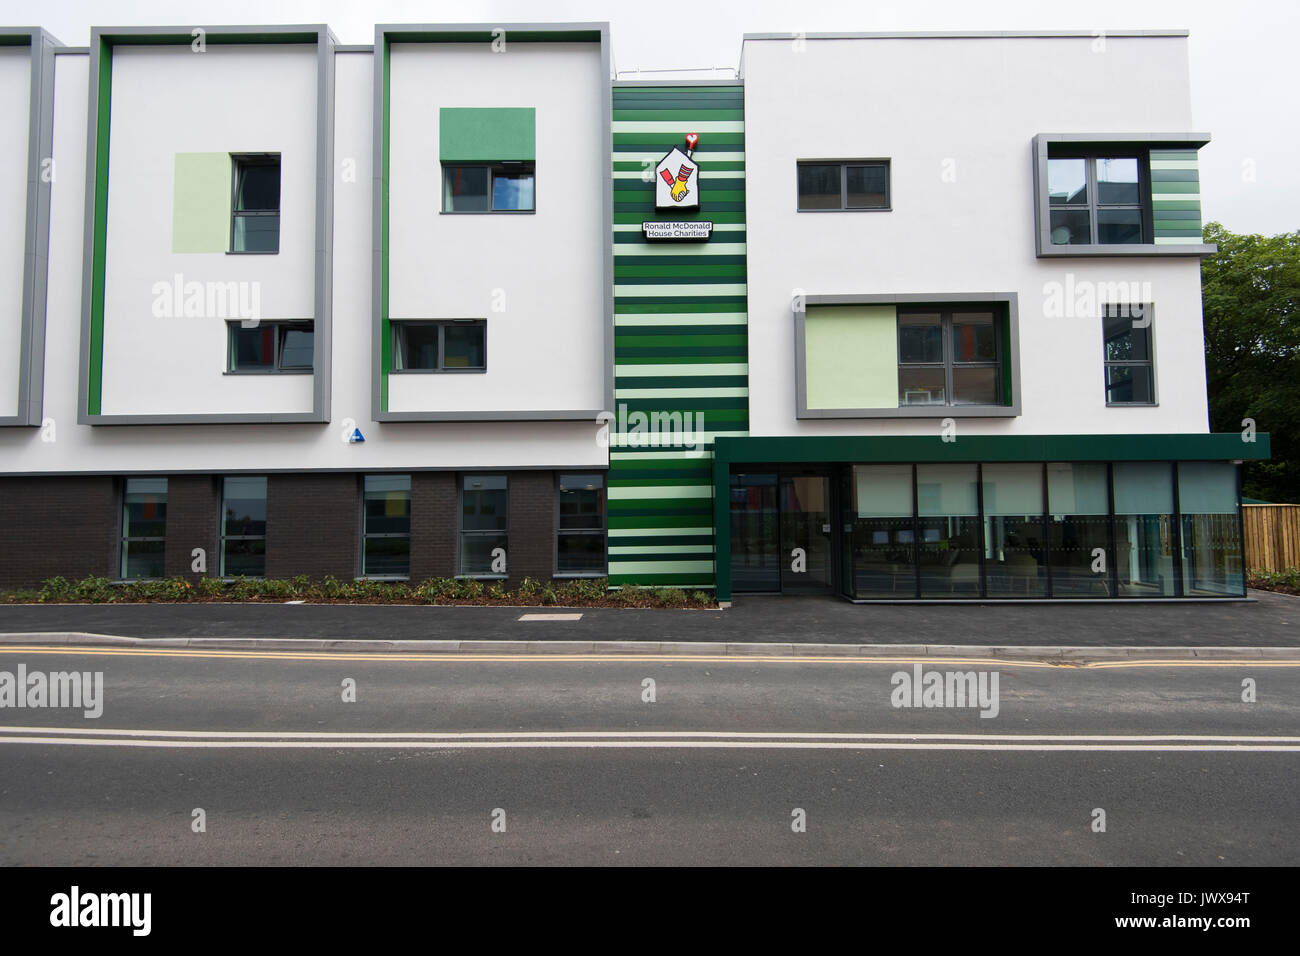 Ronald McDonald House Charities Gebäude an Heide Krankenhaus in Cardiff, Wales, UK. Stockfoto